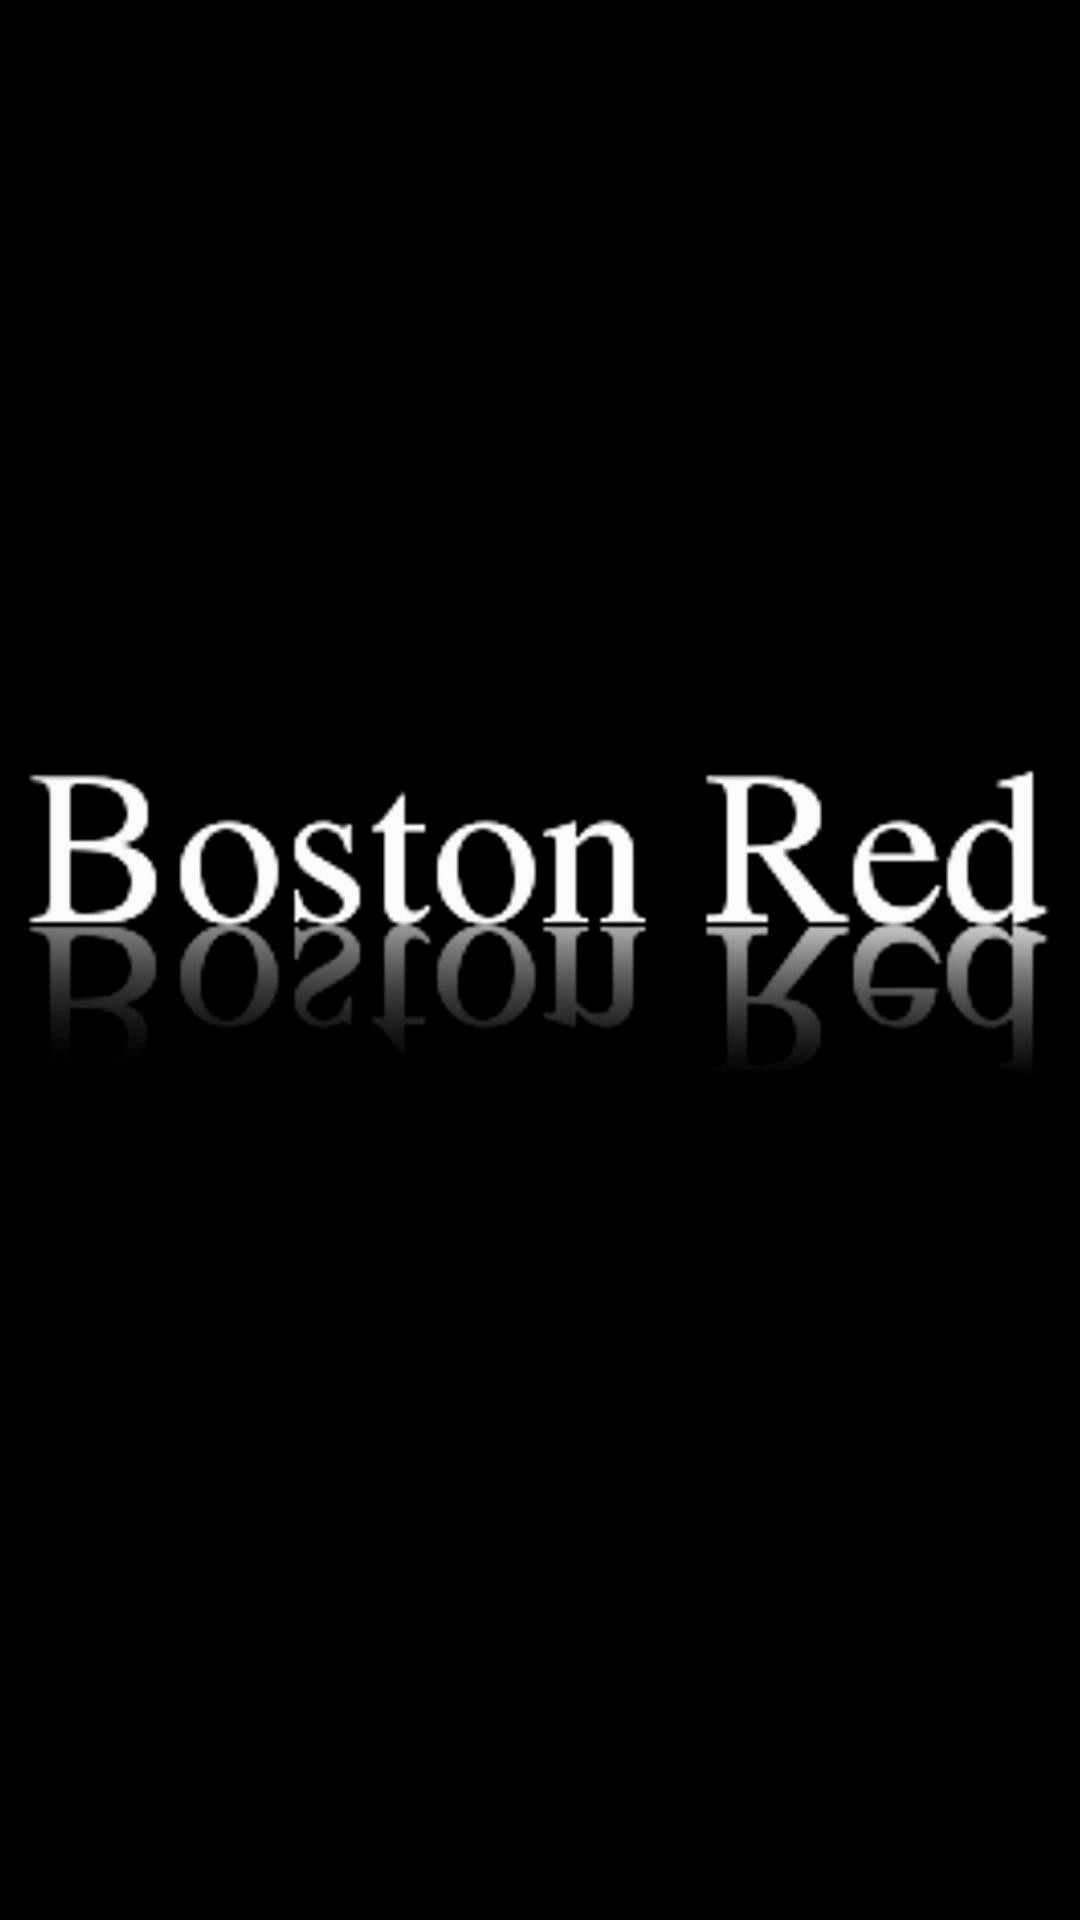 Wallpaper.wiki Boston Red Sox iPhone Wallpaper Free